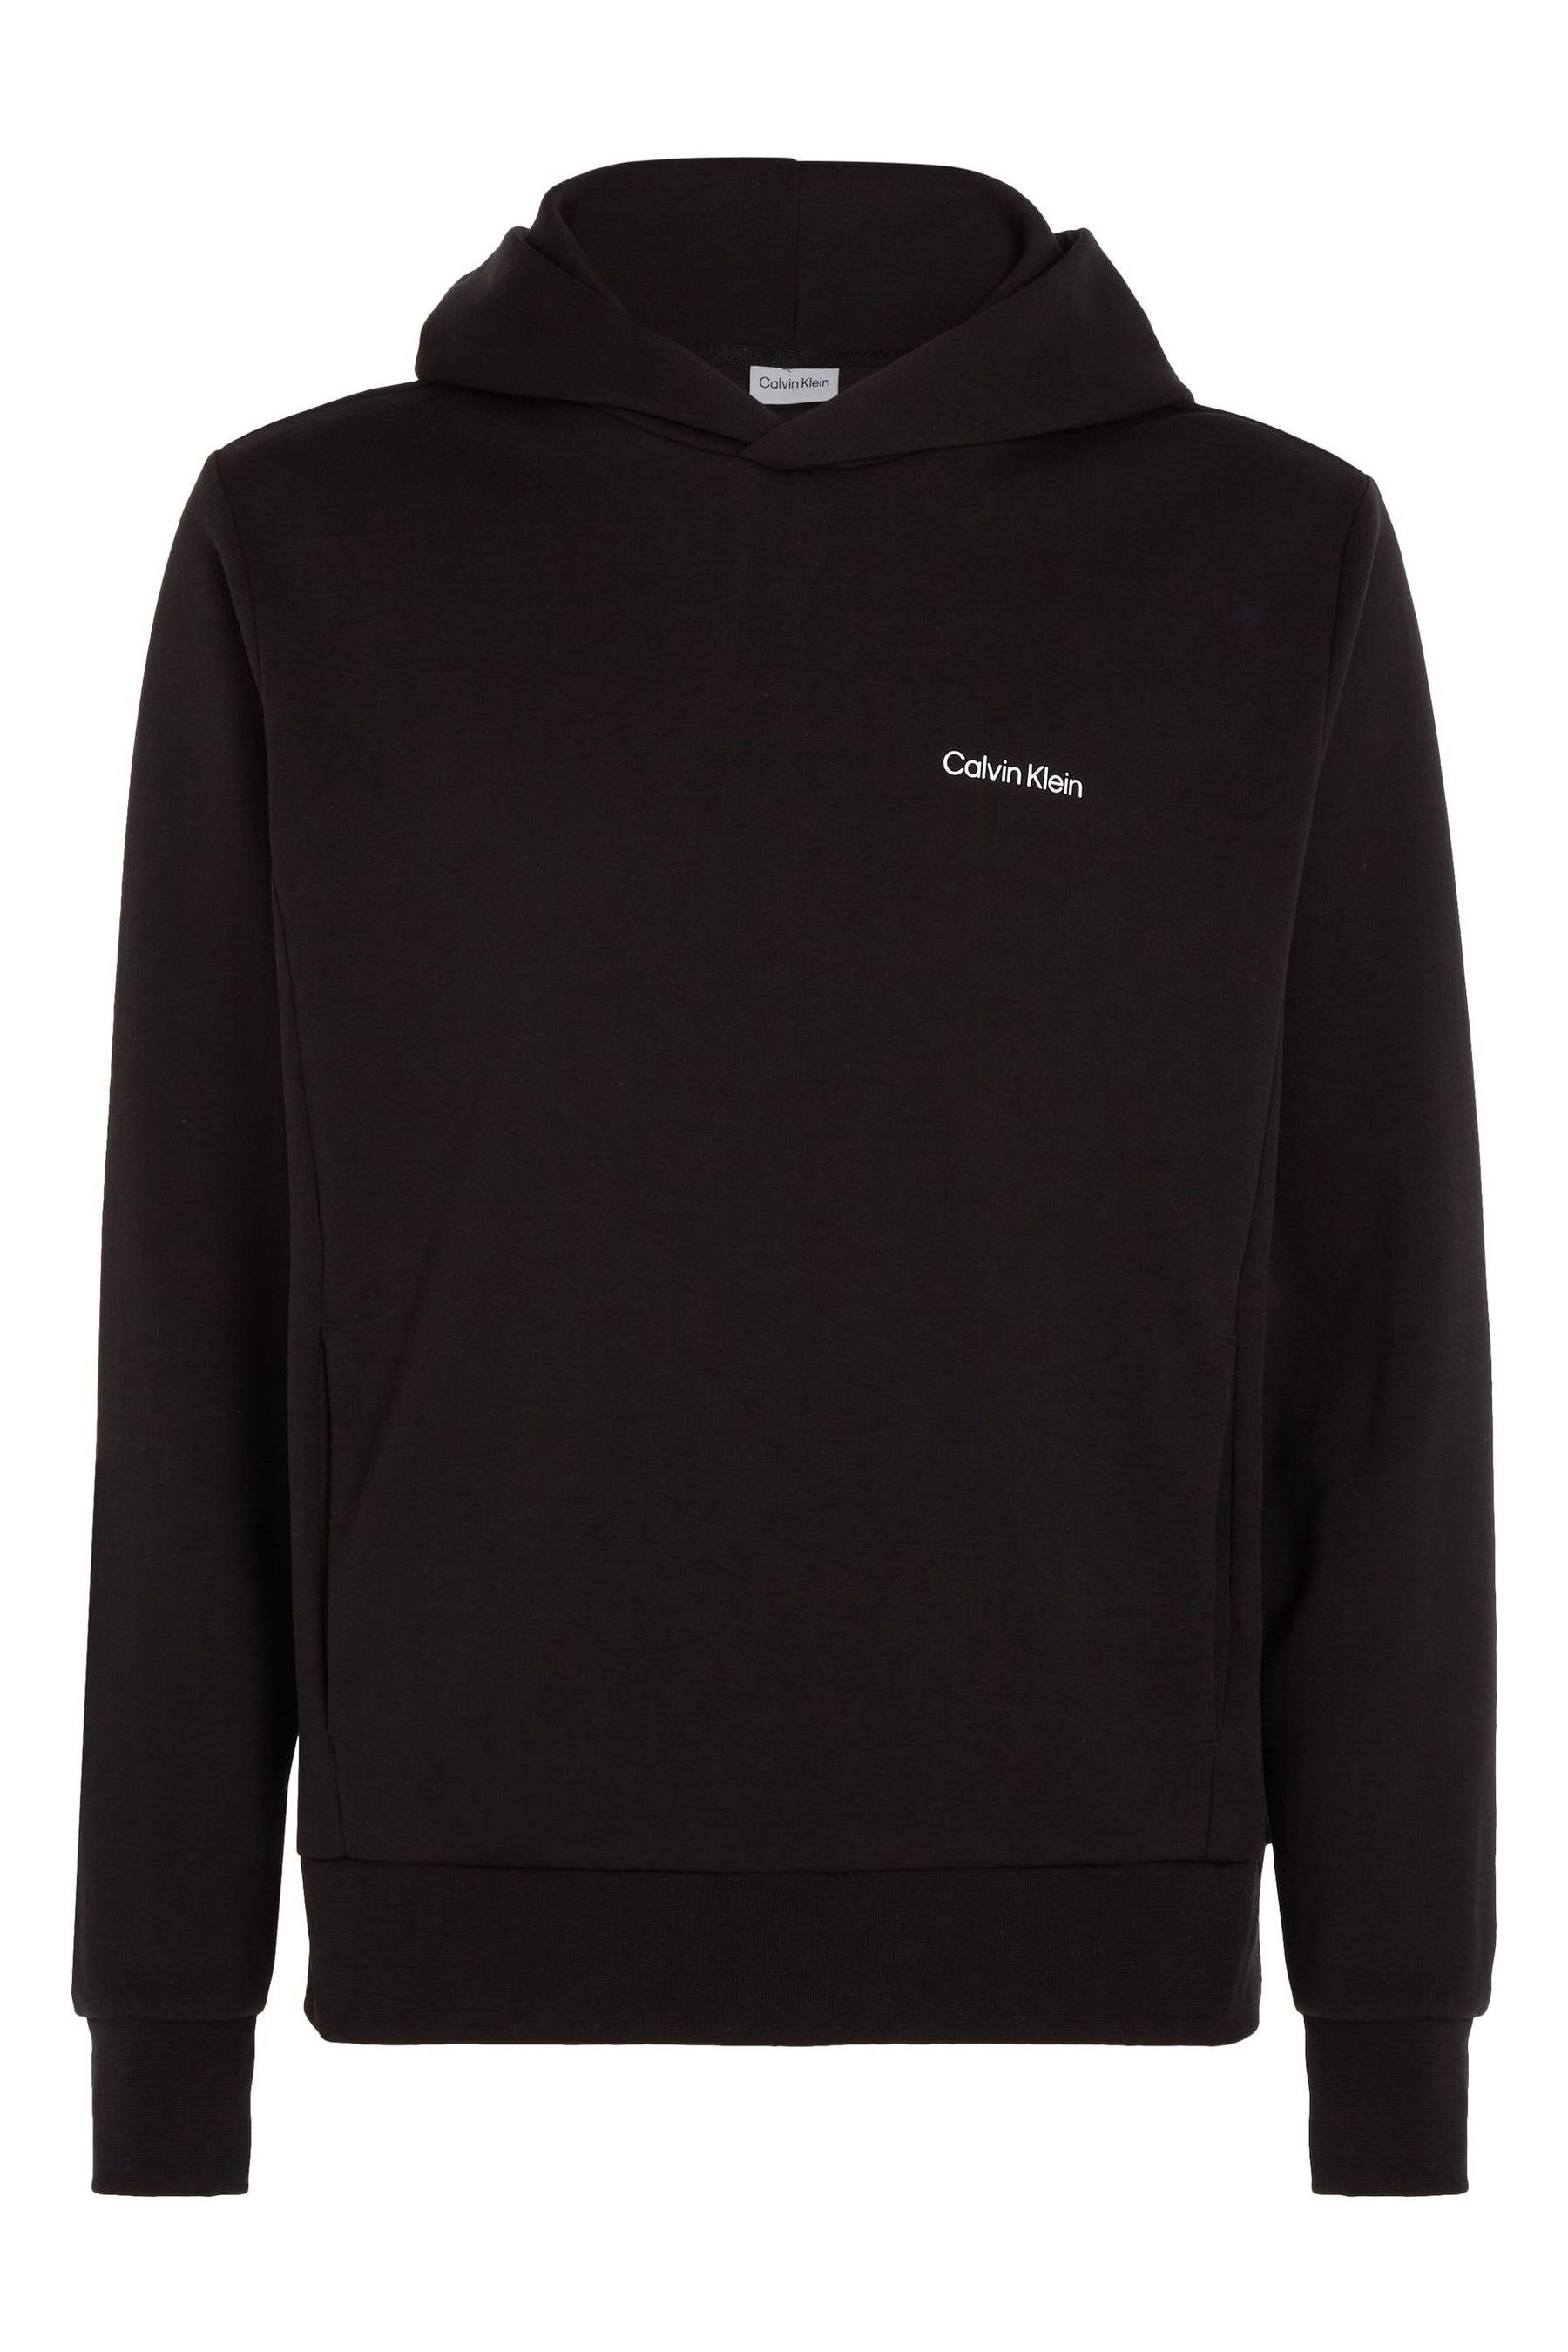 Buy Calvin Klein Black Micro Logo Hoodie from the Next UK online shop